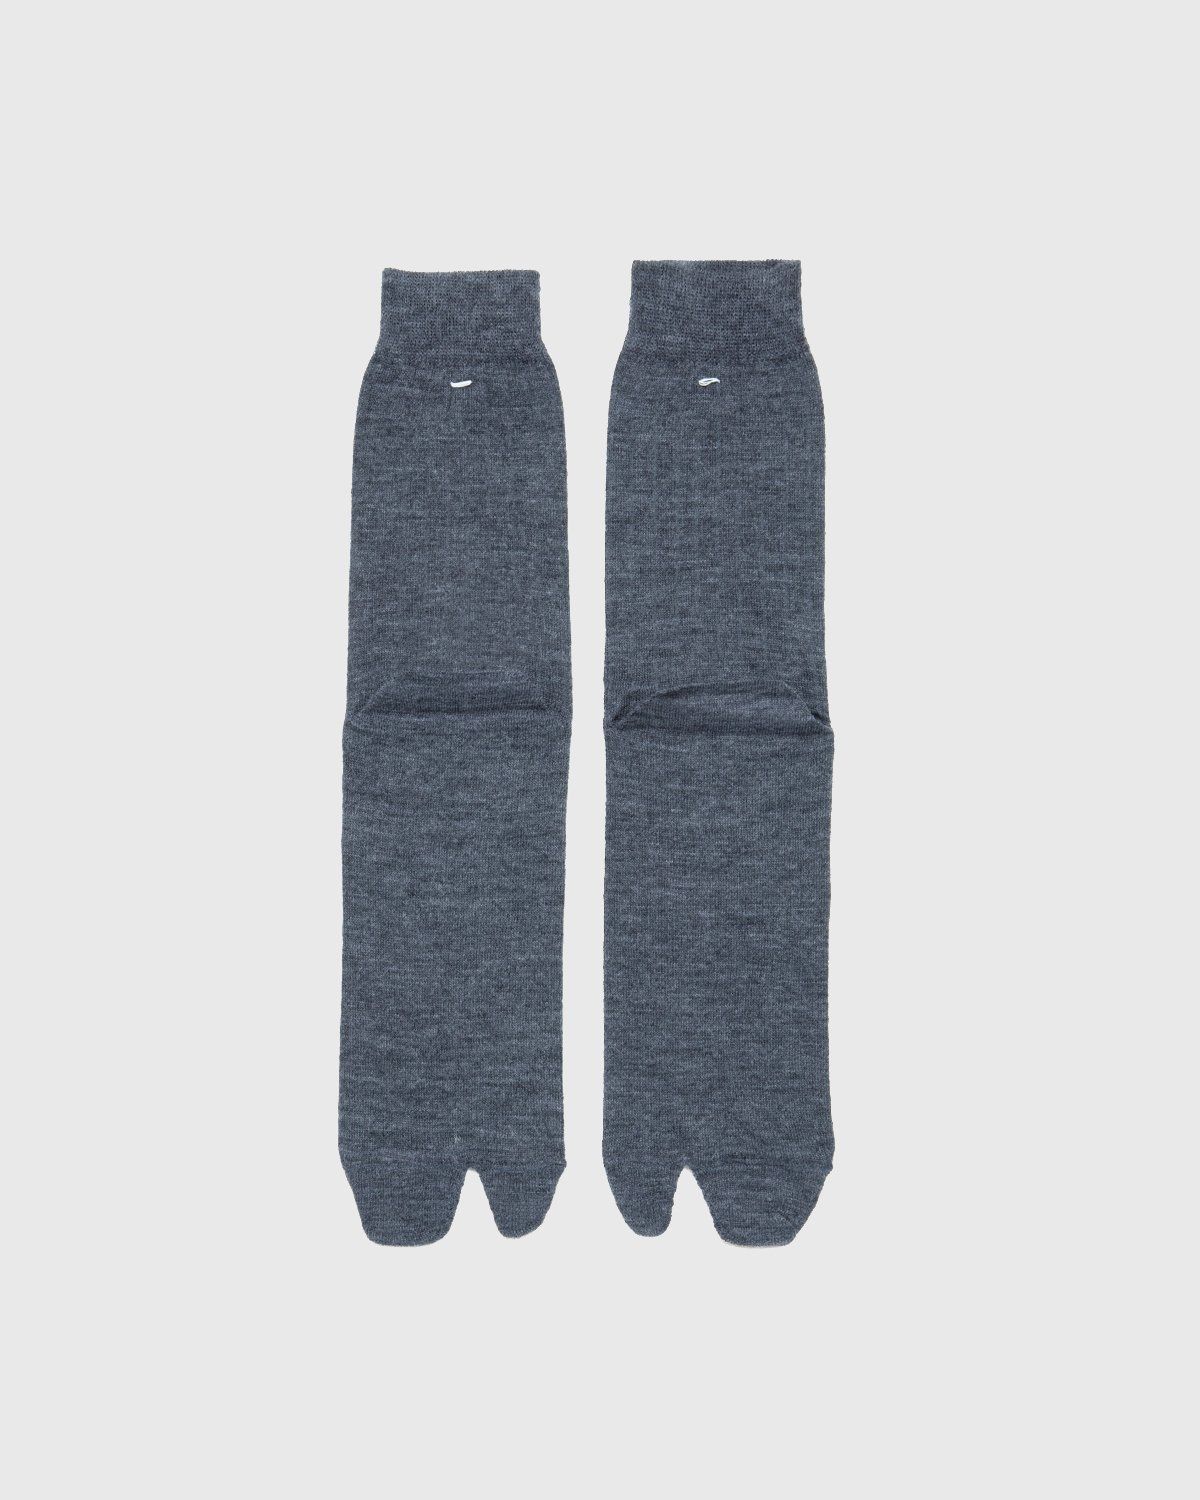 Maison Margiela – Tabi Socks Grey - Socks - Grey - Image 3